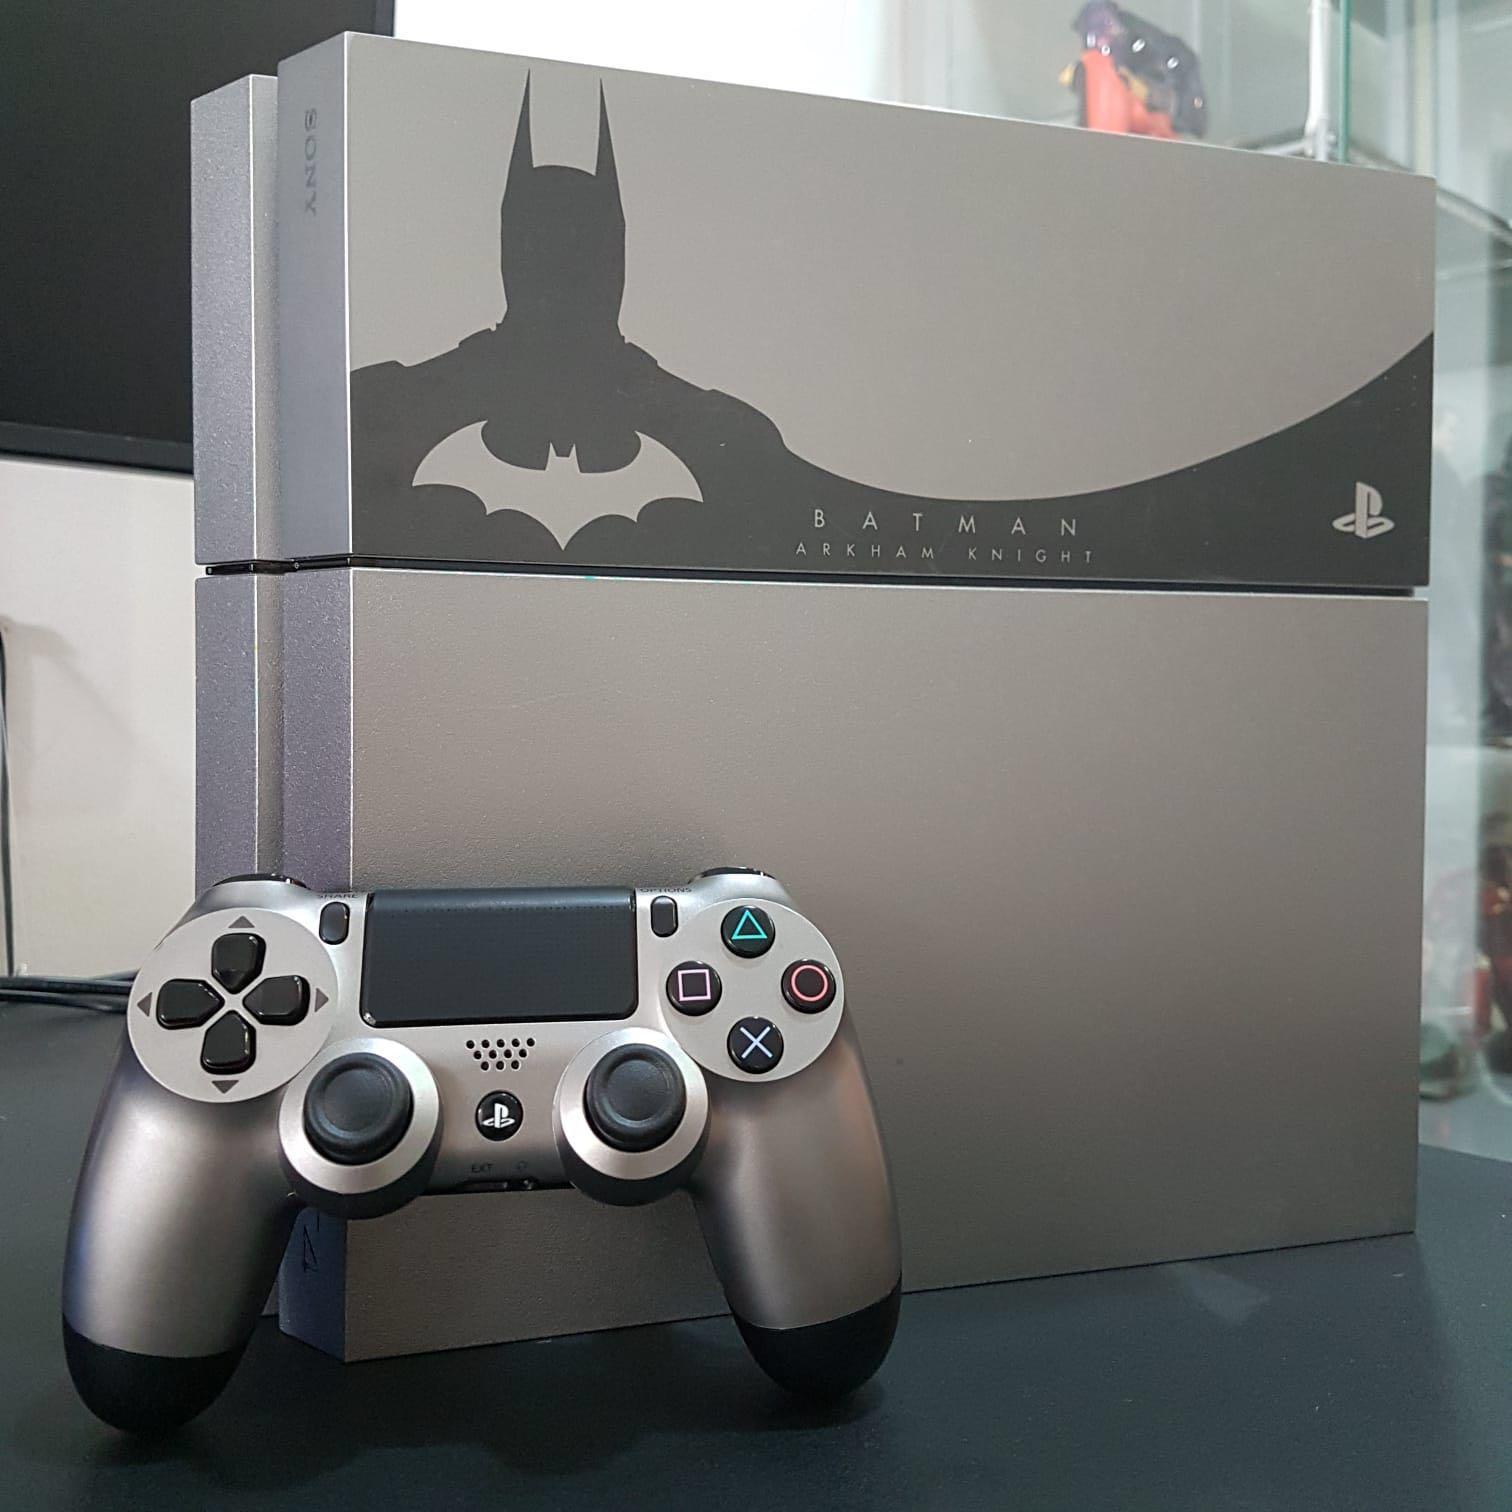 ps4 batman edition console